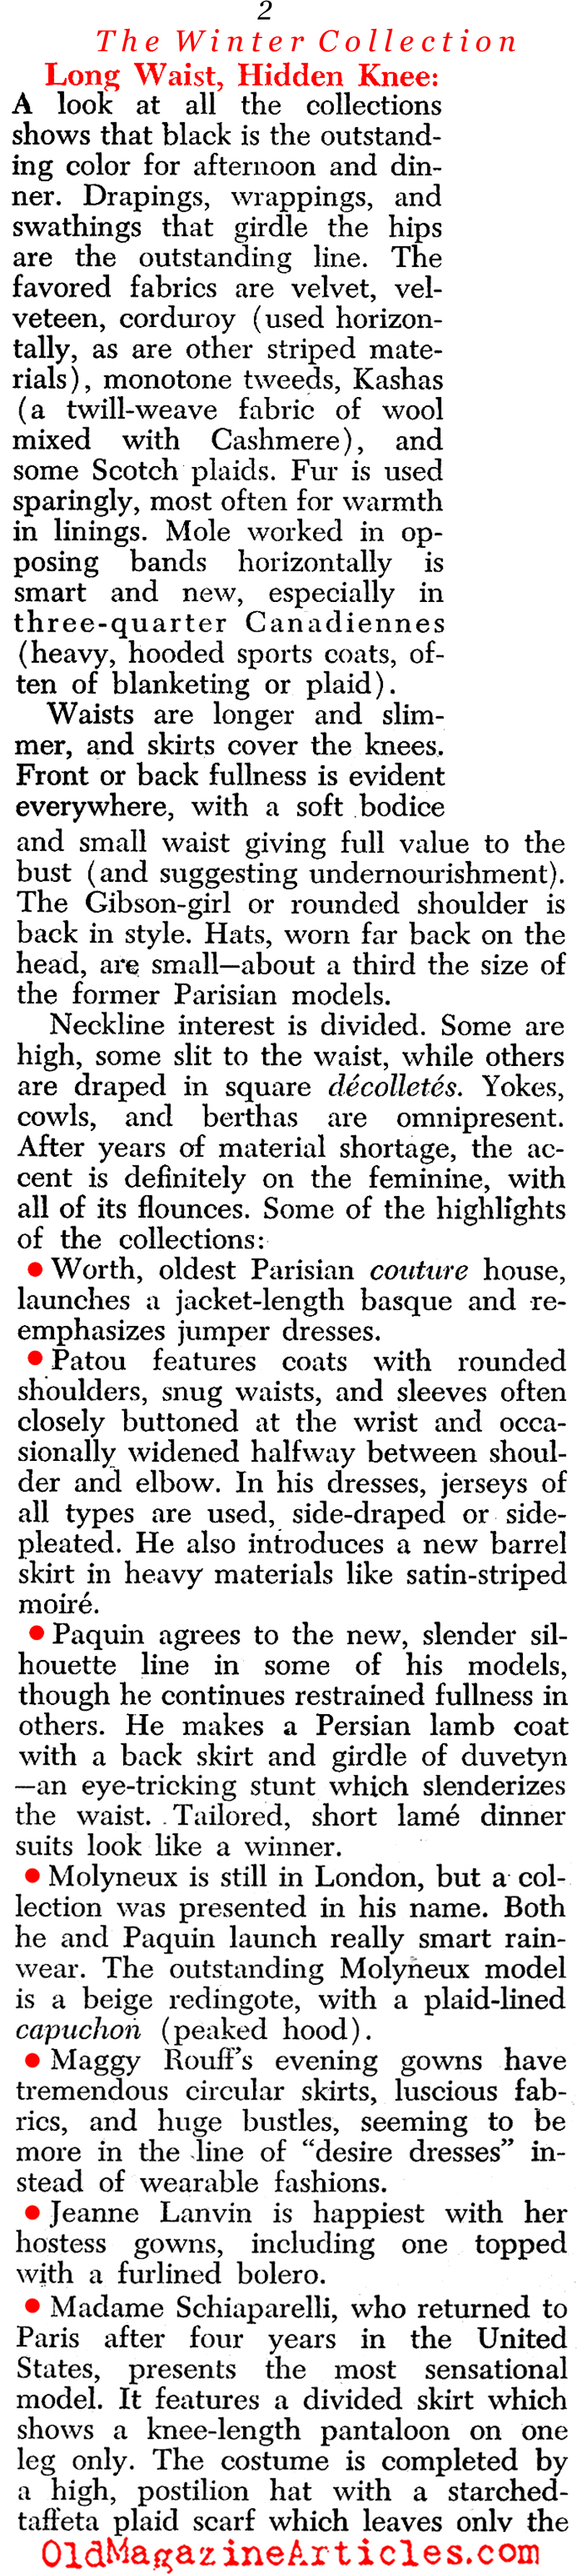 The Paris Winter Collection (Newsweek Magazine, 1945)